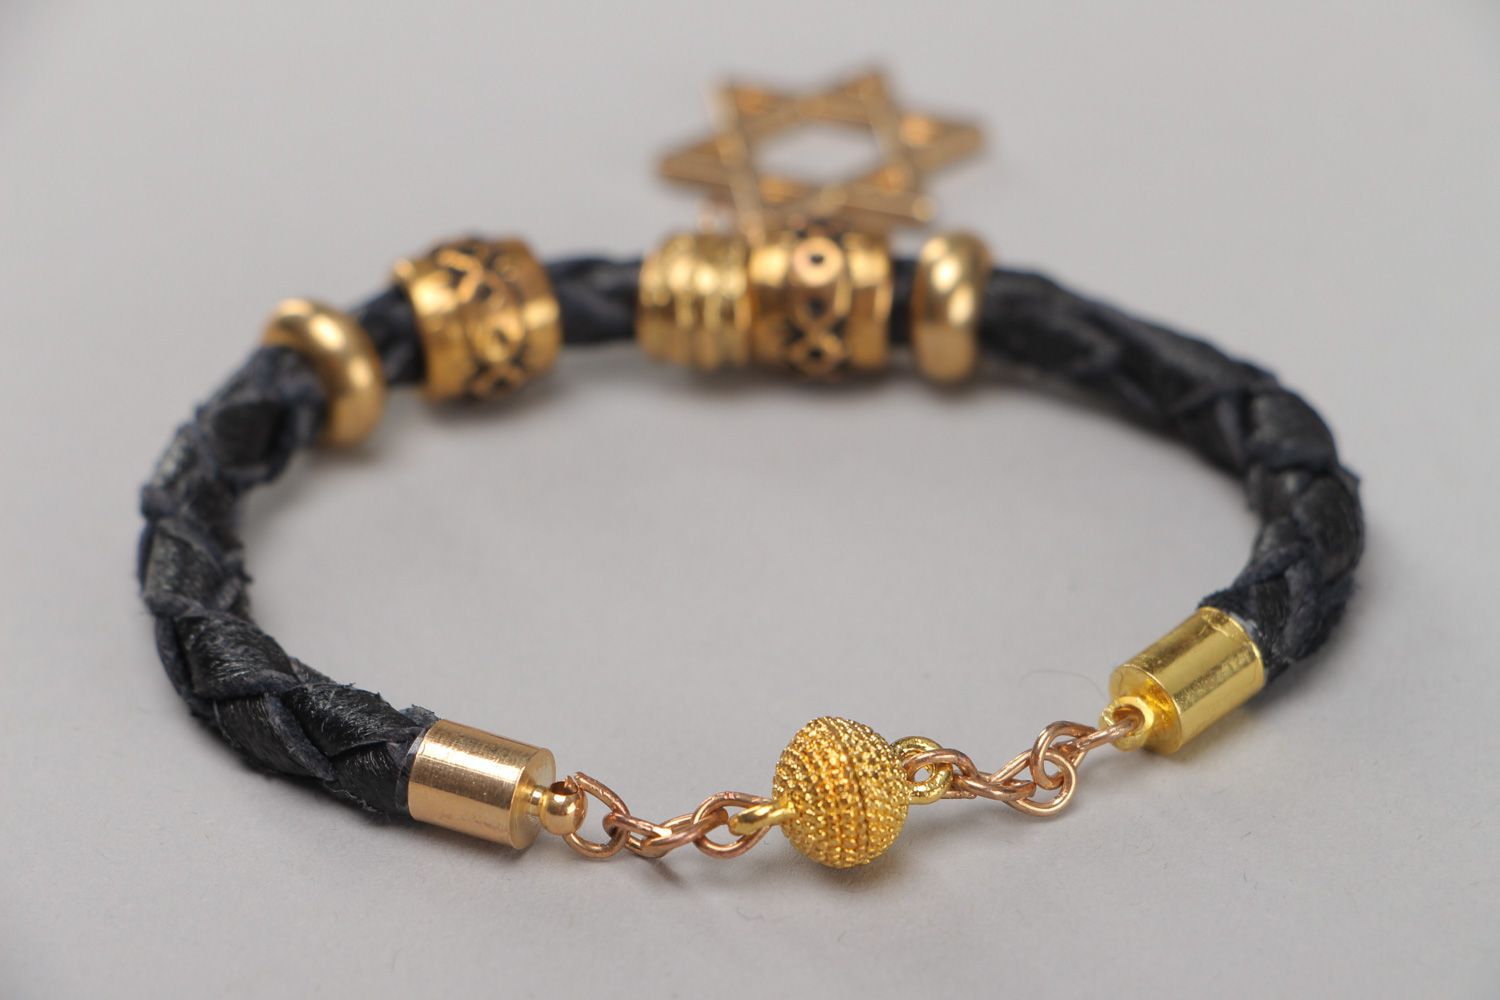 Handmade wrist bracelet woven of genuine leather with metal charm Star of Judah photo 4